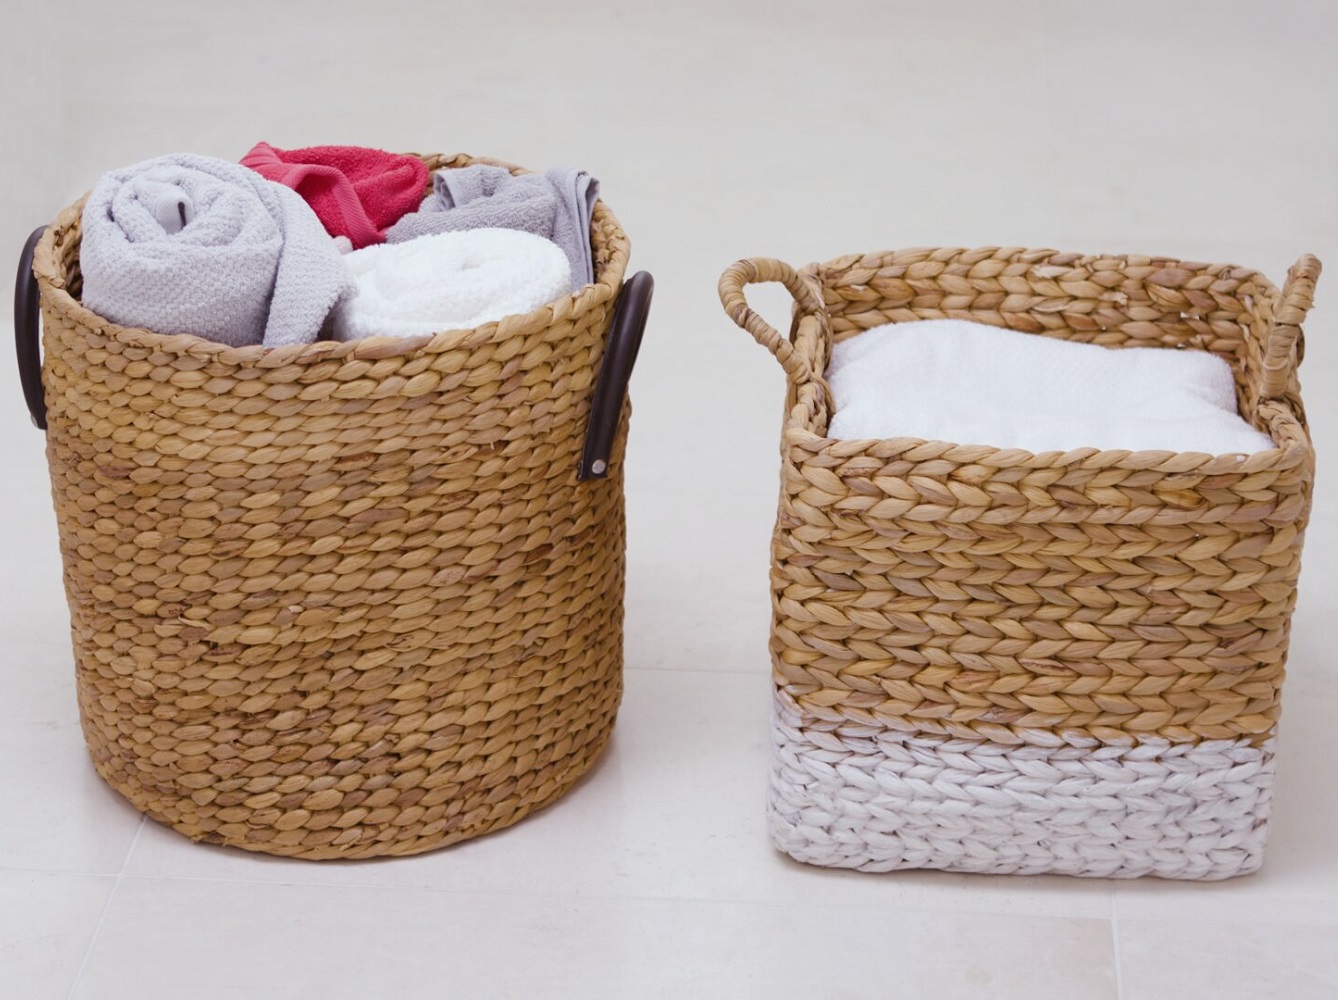 Baskets & Bins For Your Bathroom